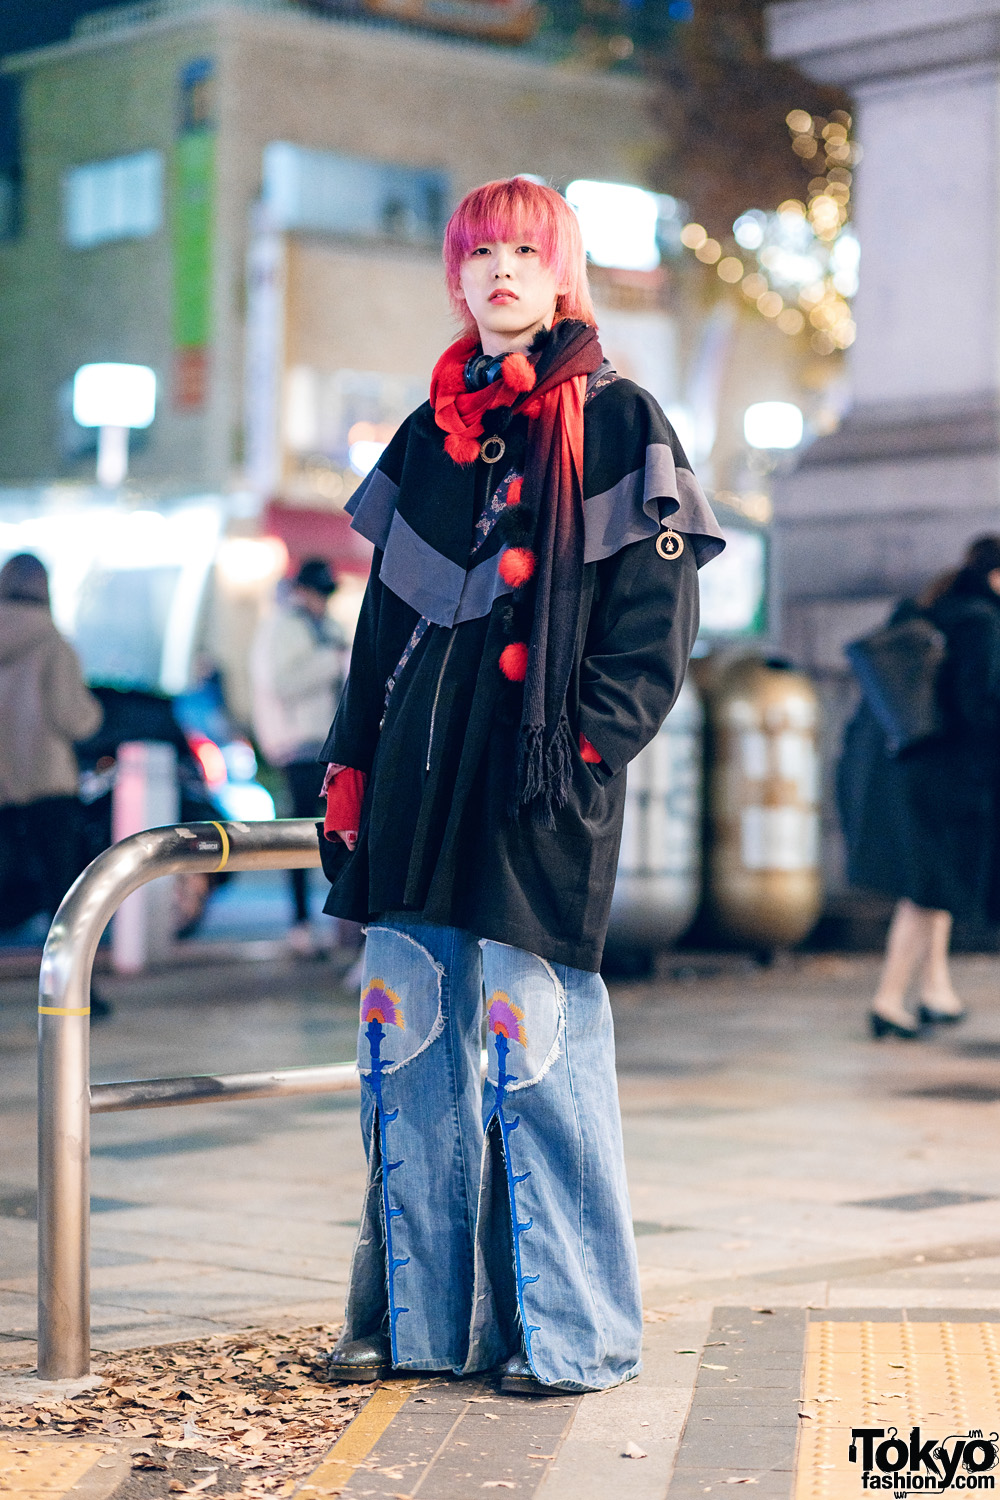 Japanese Streetwear  w/ Red Hair, Headphones, Pom Pom Muffler, Capelet Jacket, Pameo Pose Flared Slit Jeans, Anna Sui & Dr. Martens